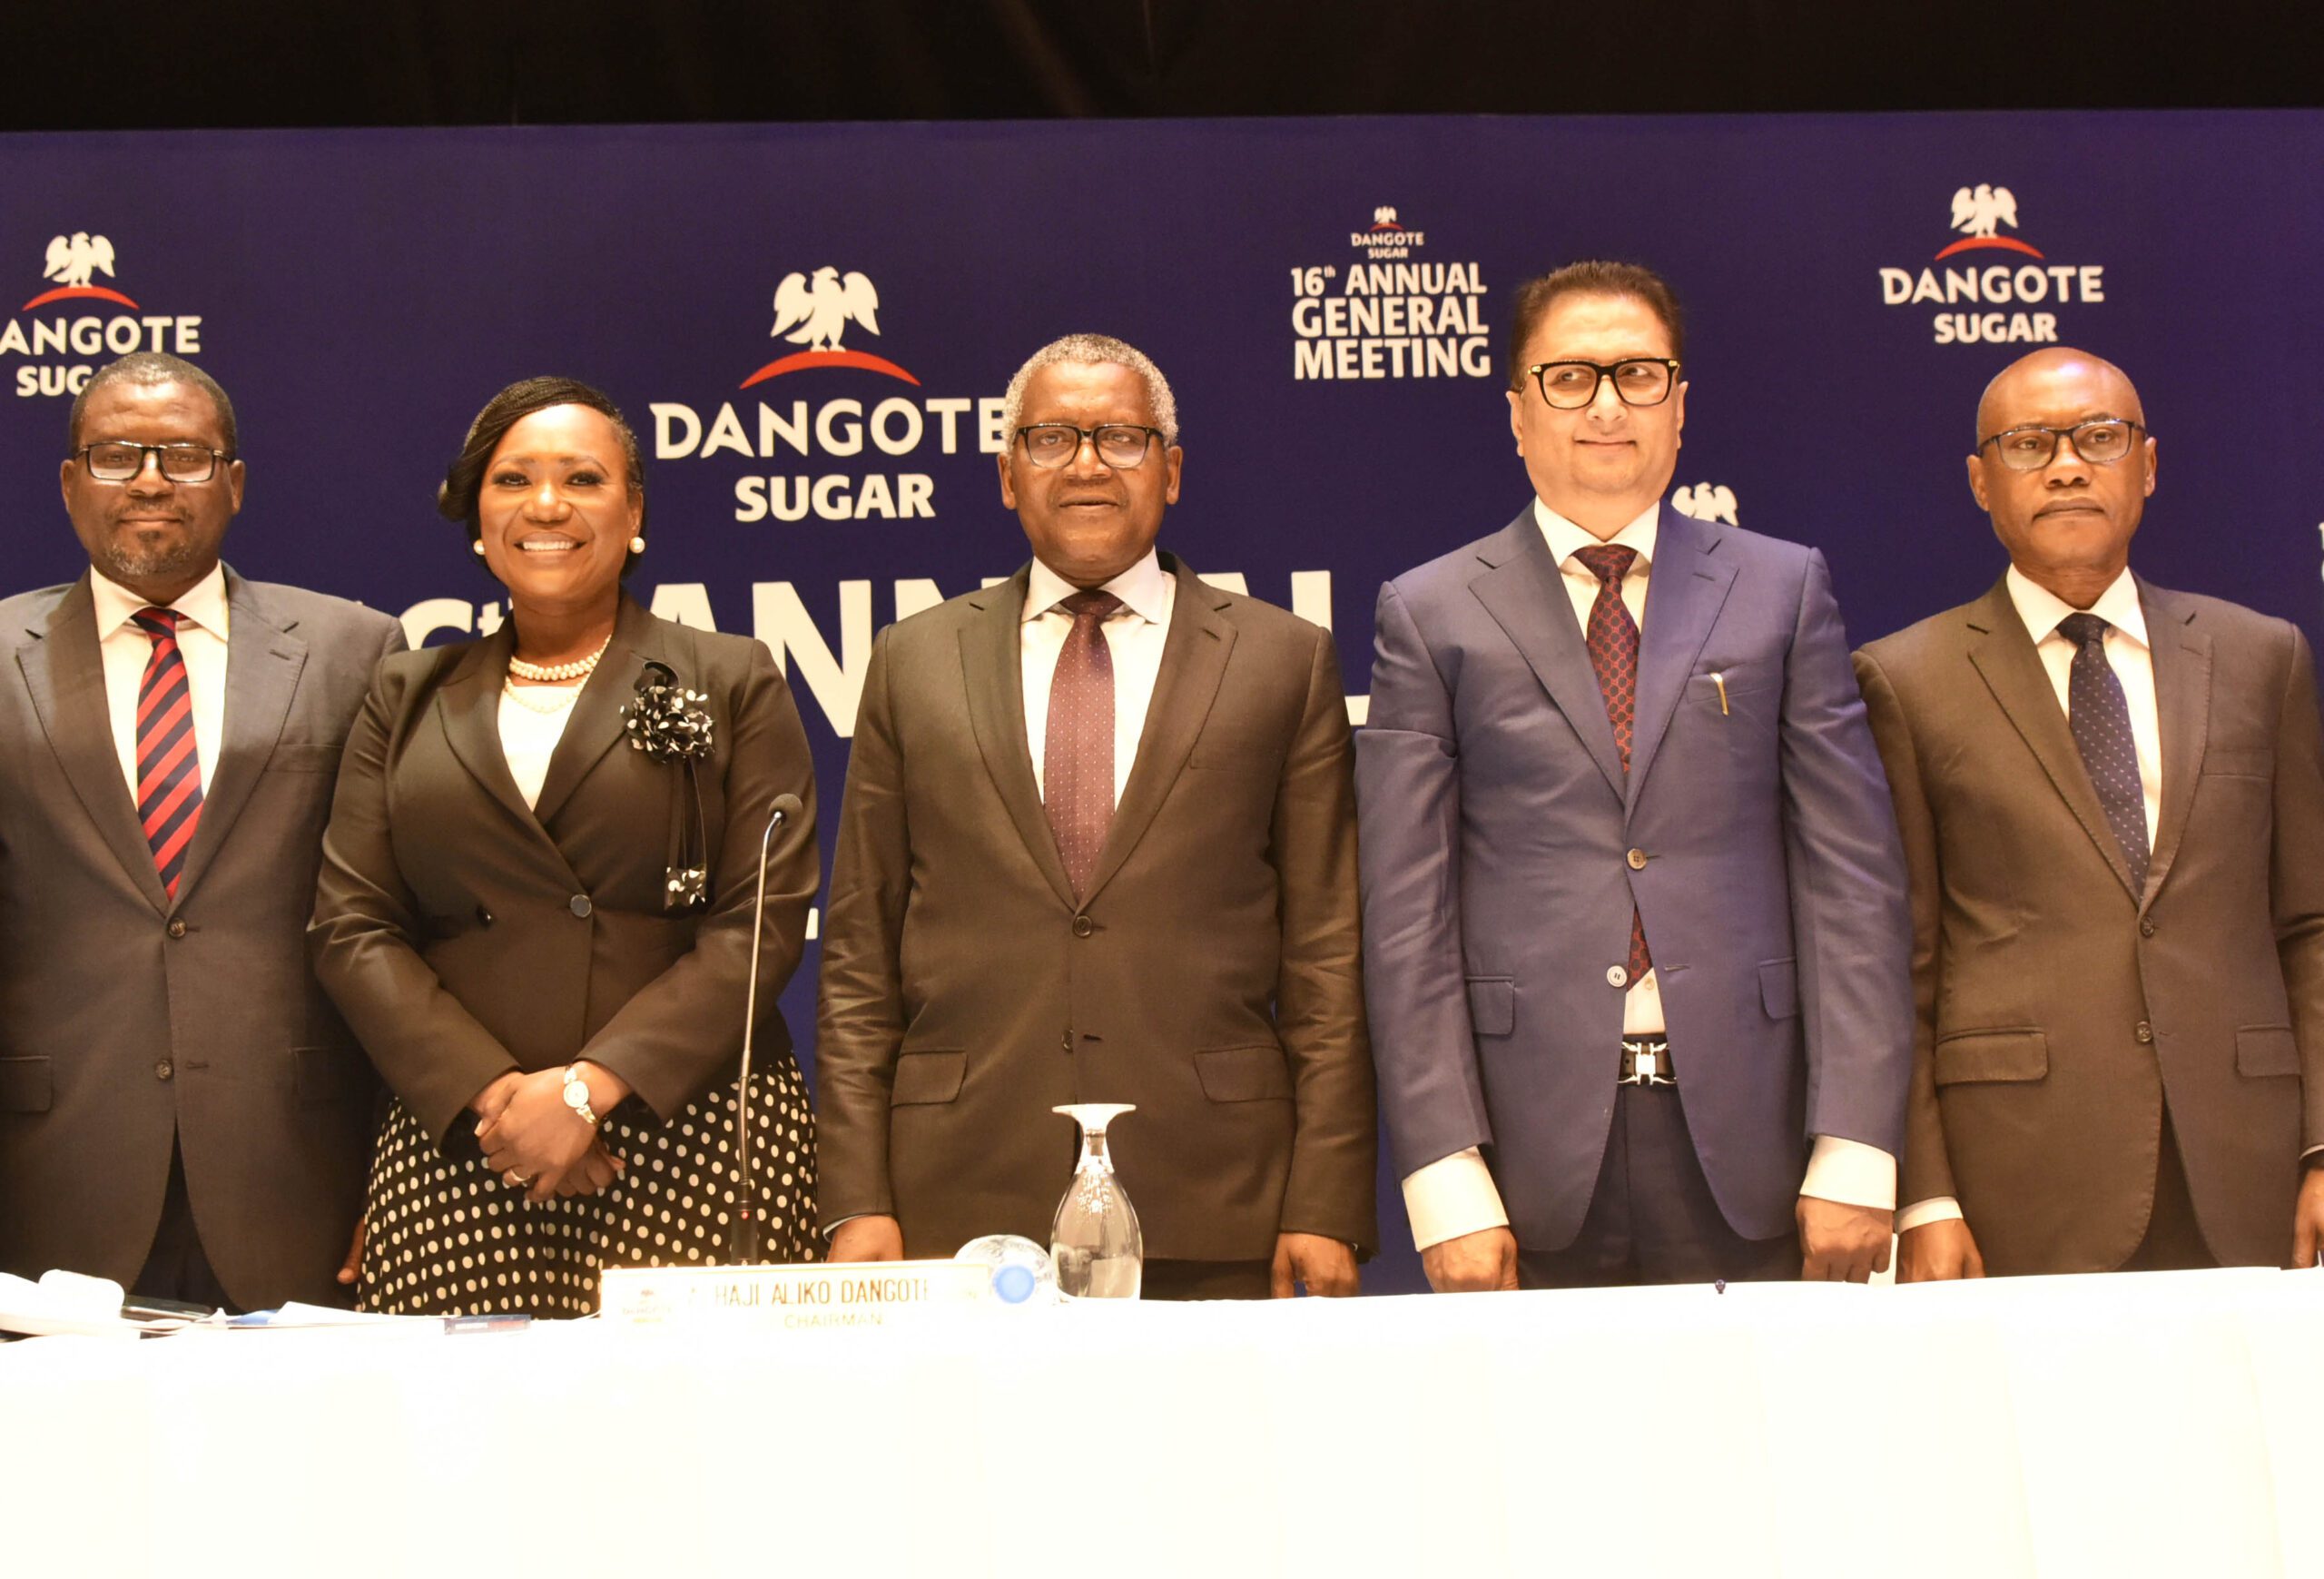 L-R: Non-Executive Director, Dangote Sugar Refinery Plc, Abdu Dantata; Company Secretary/Legal Adviser, Dangote Sugar Refinery Plc, Temitope Hassan; Chairman, Dangote Sugar Refinery Plc, Aliko Dangote; Group Managing Director/CEO, Dangote Sugar Refinery Plc, Ravindra Singhvi; Non-Executive Director, Dangote Sugar Refinery Plc, Olakunle Alake, at the 16th Annual General Meeting of Dangote Sugar Refinery Plc held in Lagos on June 15, 2022